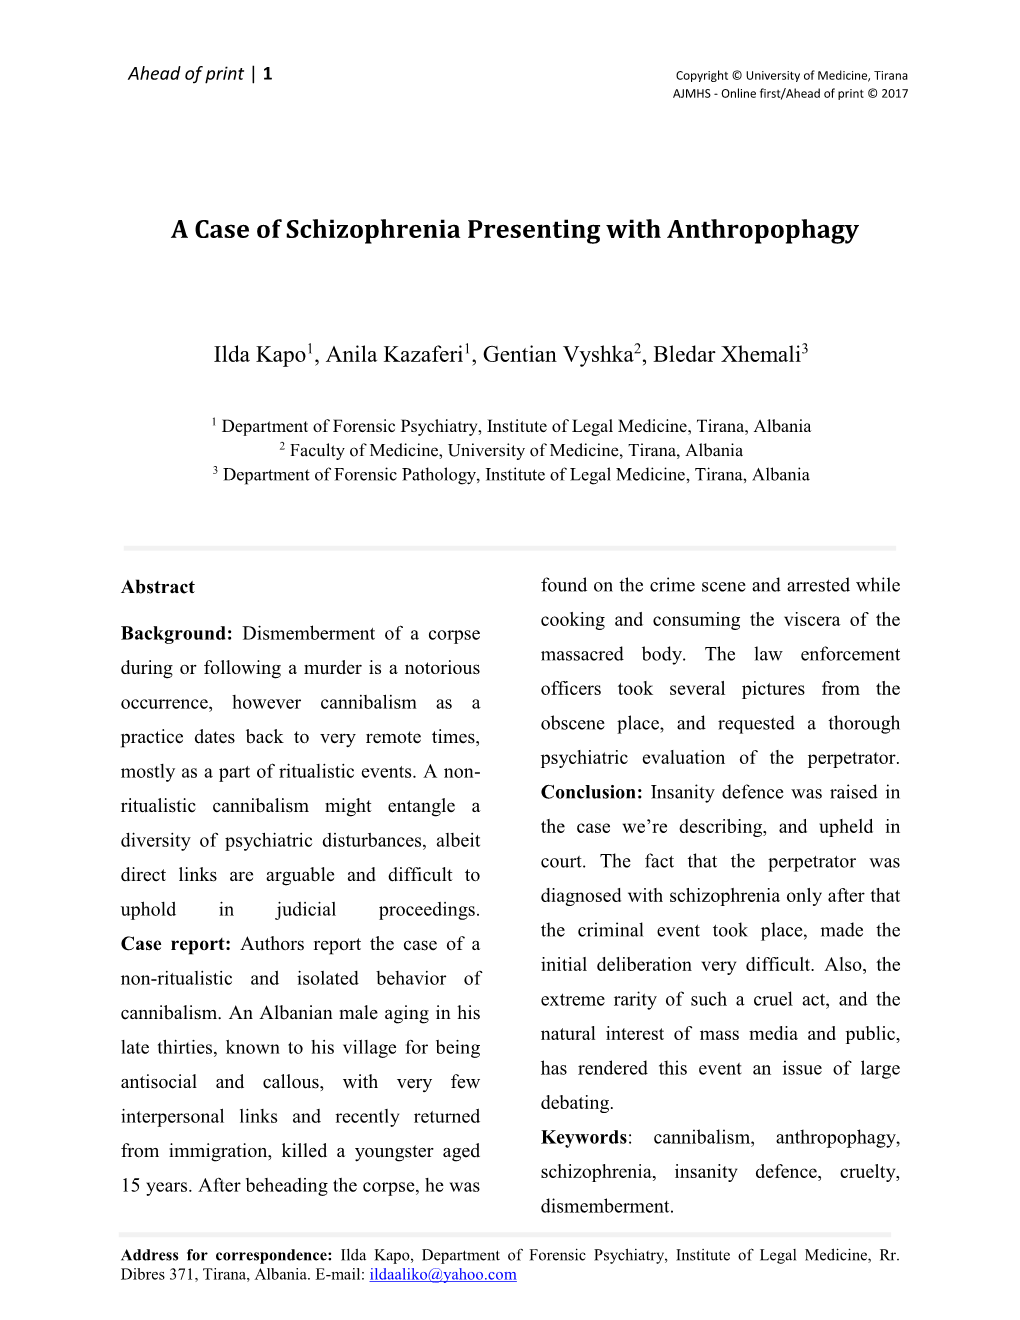 A Case of Schizophrenia Presenting with Anthropophagy